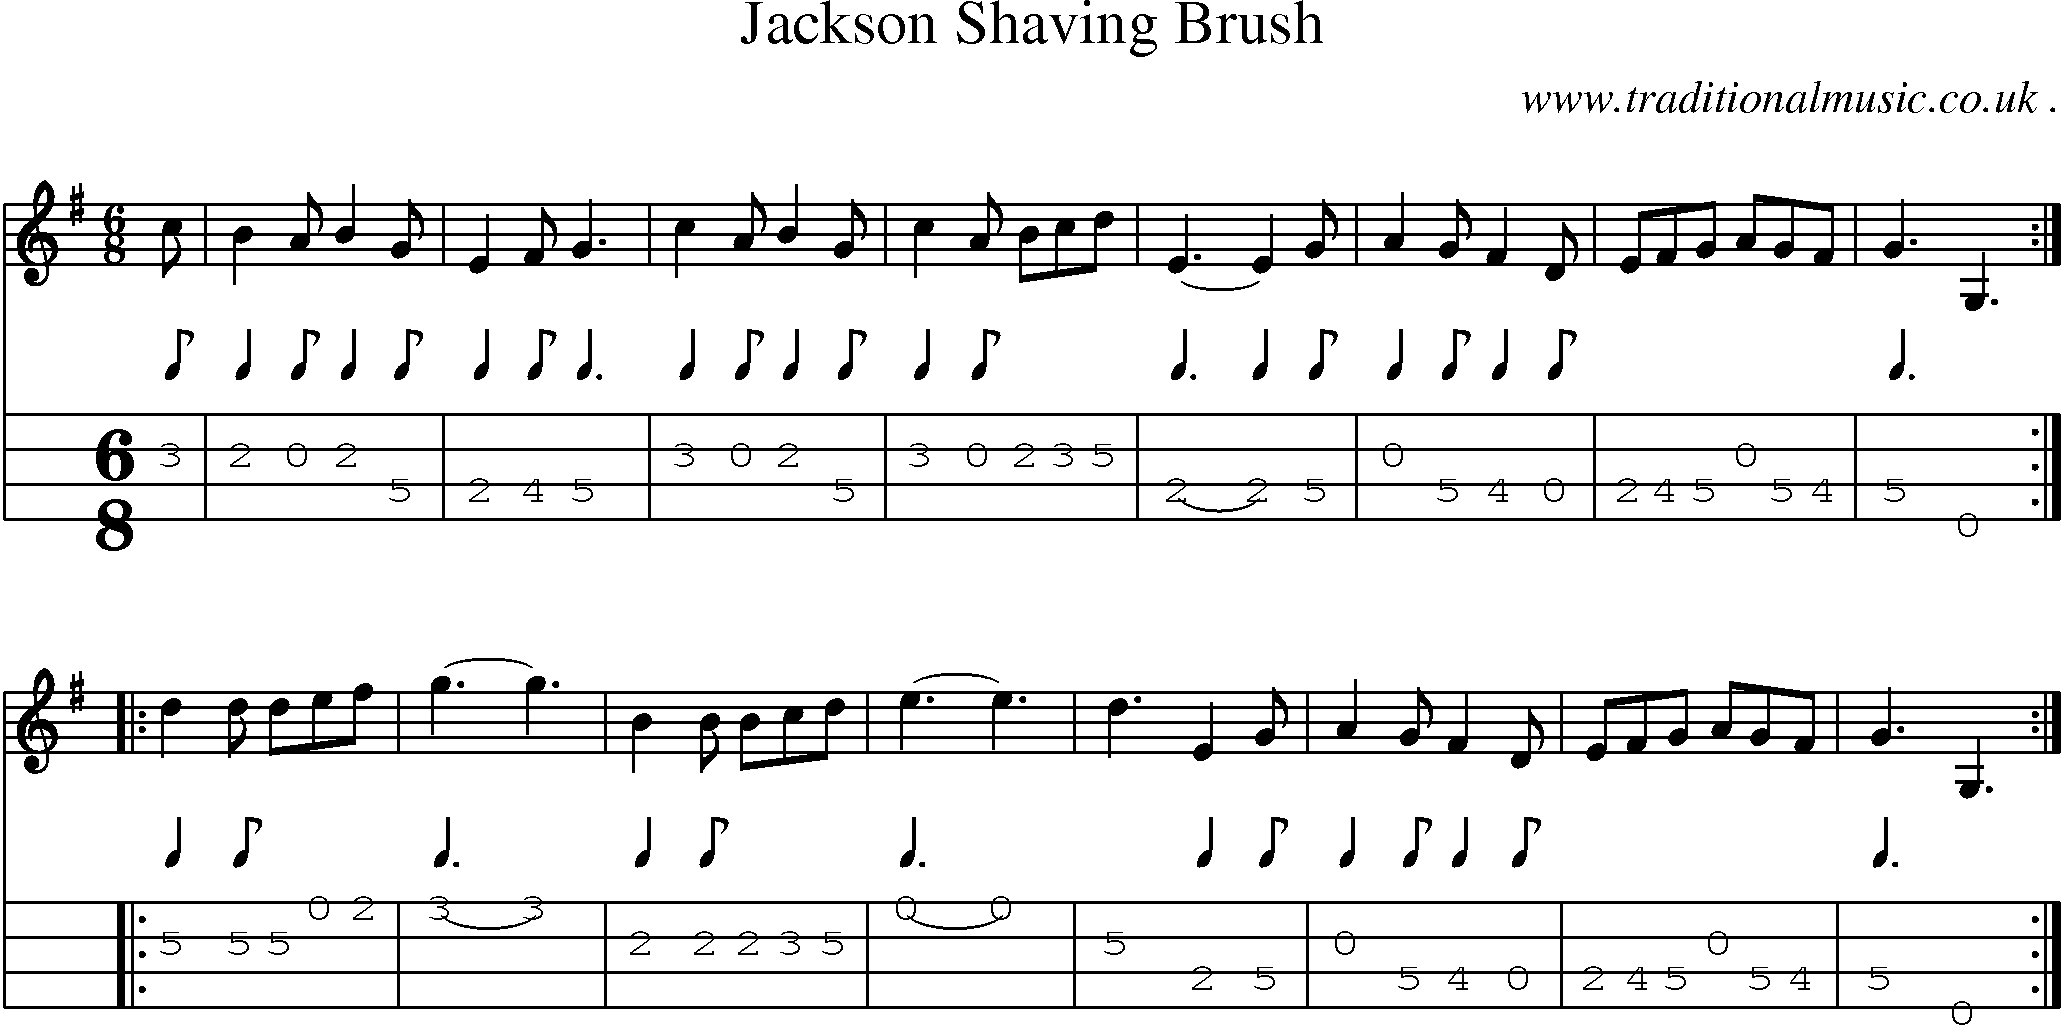 Sheet-Music and Mandolin Tabs for Jackson Shaving Brush